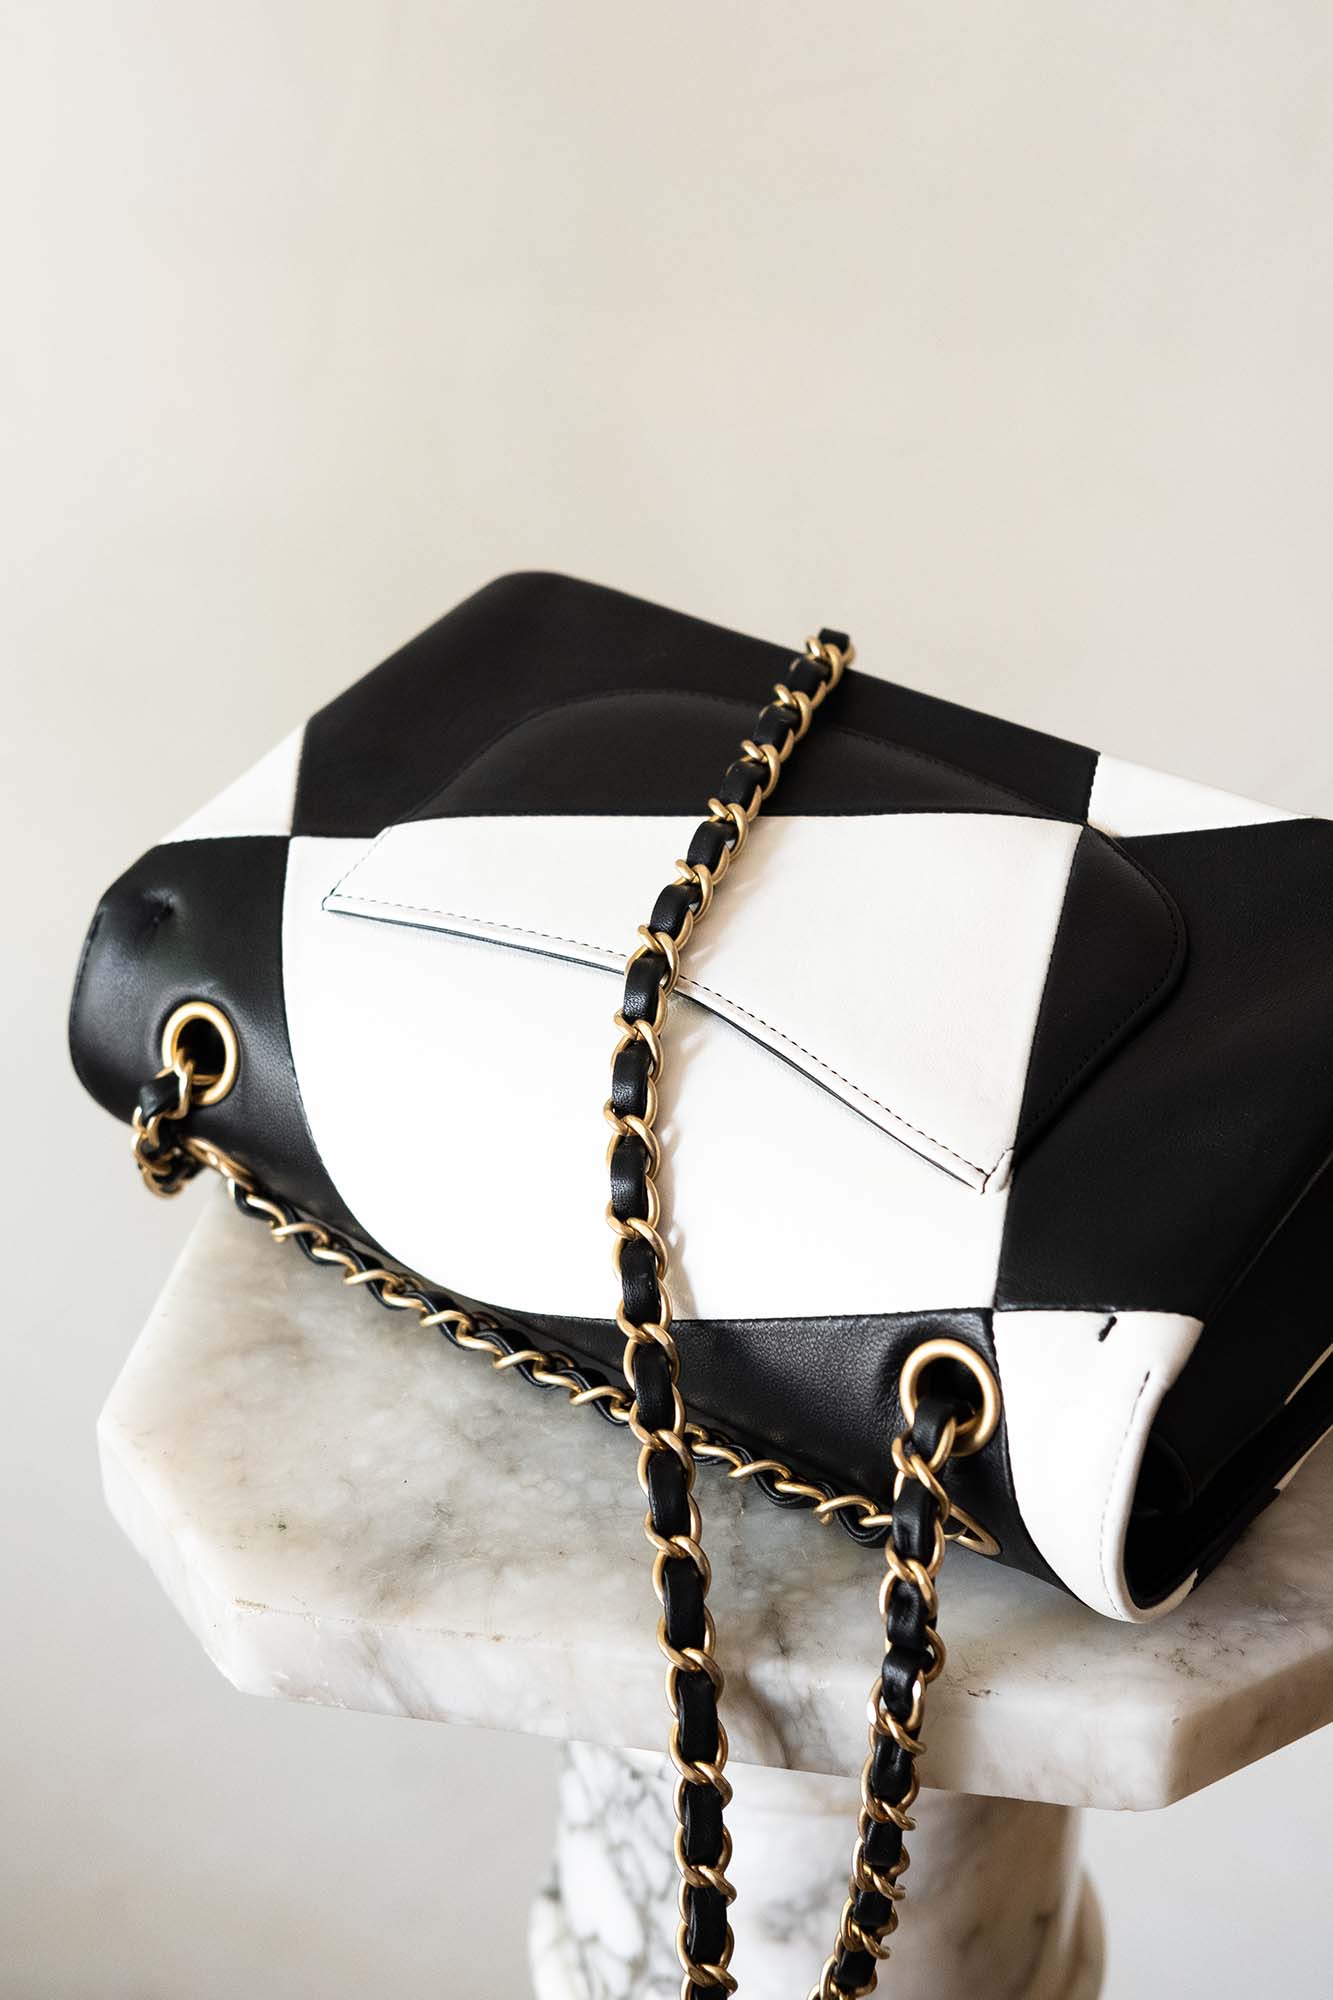 White Black Red Ribbons Strap Metal Gold Chain Shoulder Bag Handbag Purse